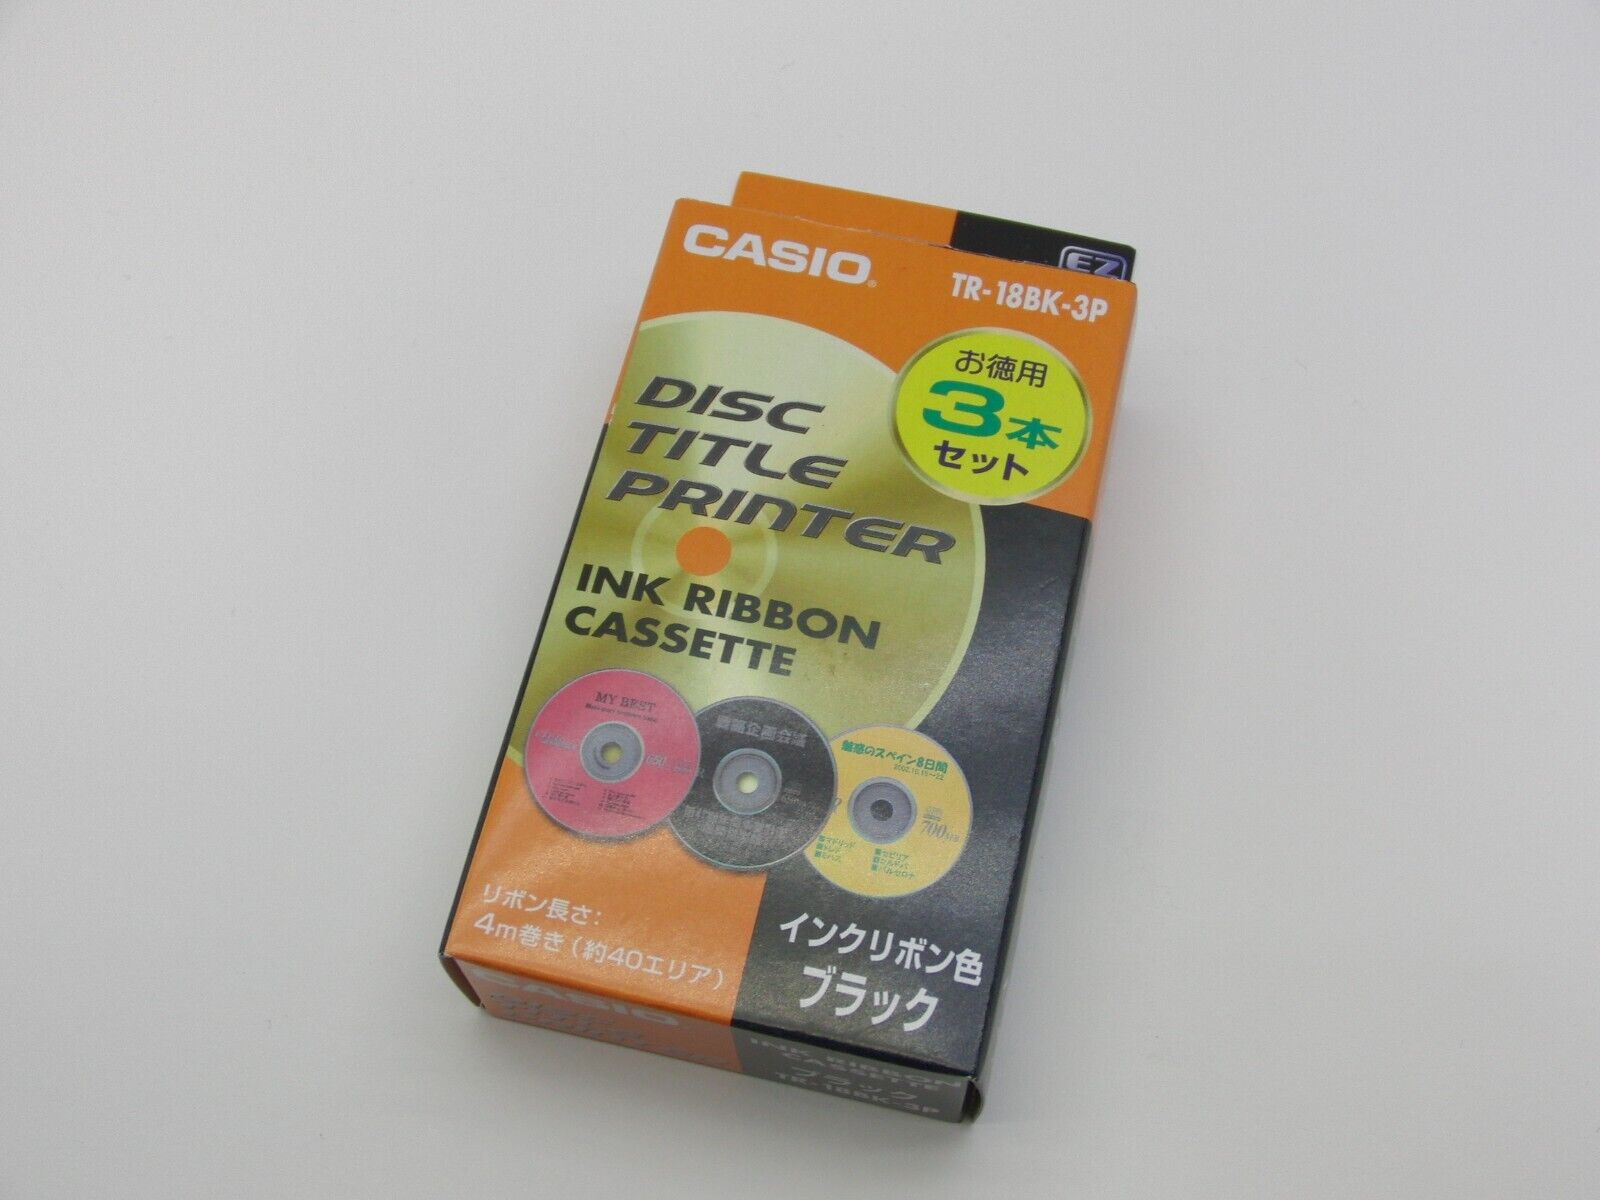 Casio TR-18BK-3P Black Ink Ribbon Disc Title Printer 3pcs Japan new F/S